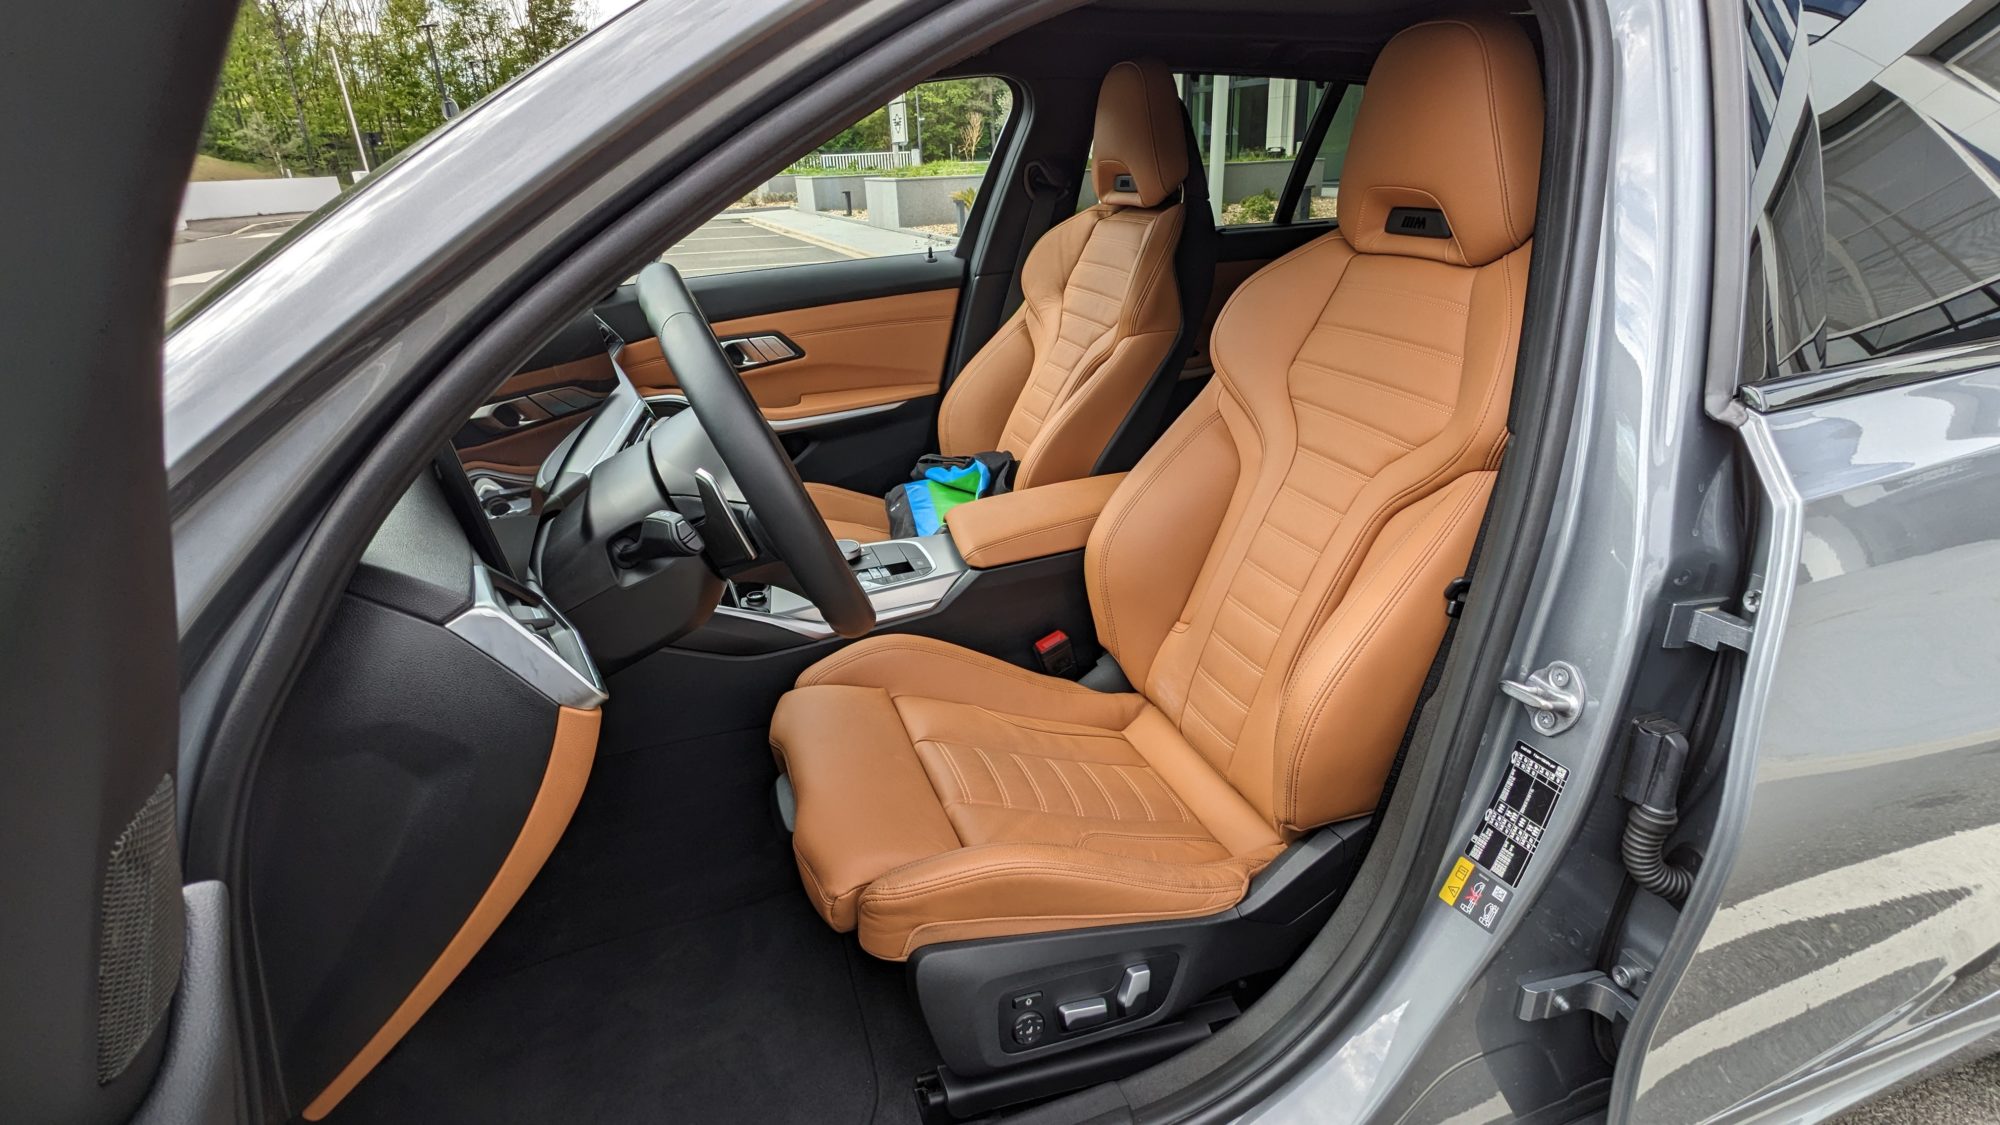 BMW M Sport seats